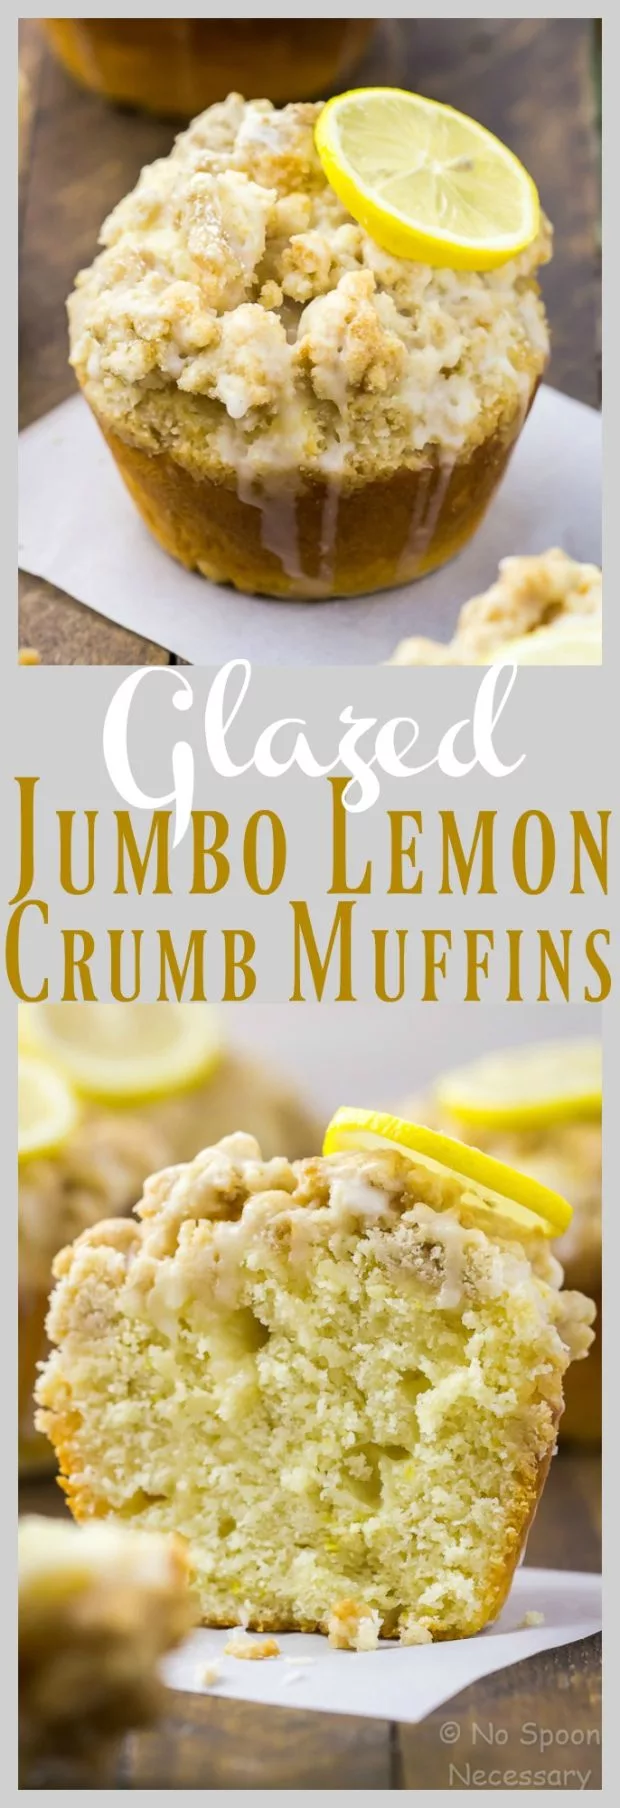 Glazed Jumbo Lemon Crumb Muffins with Yogurt